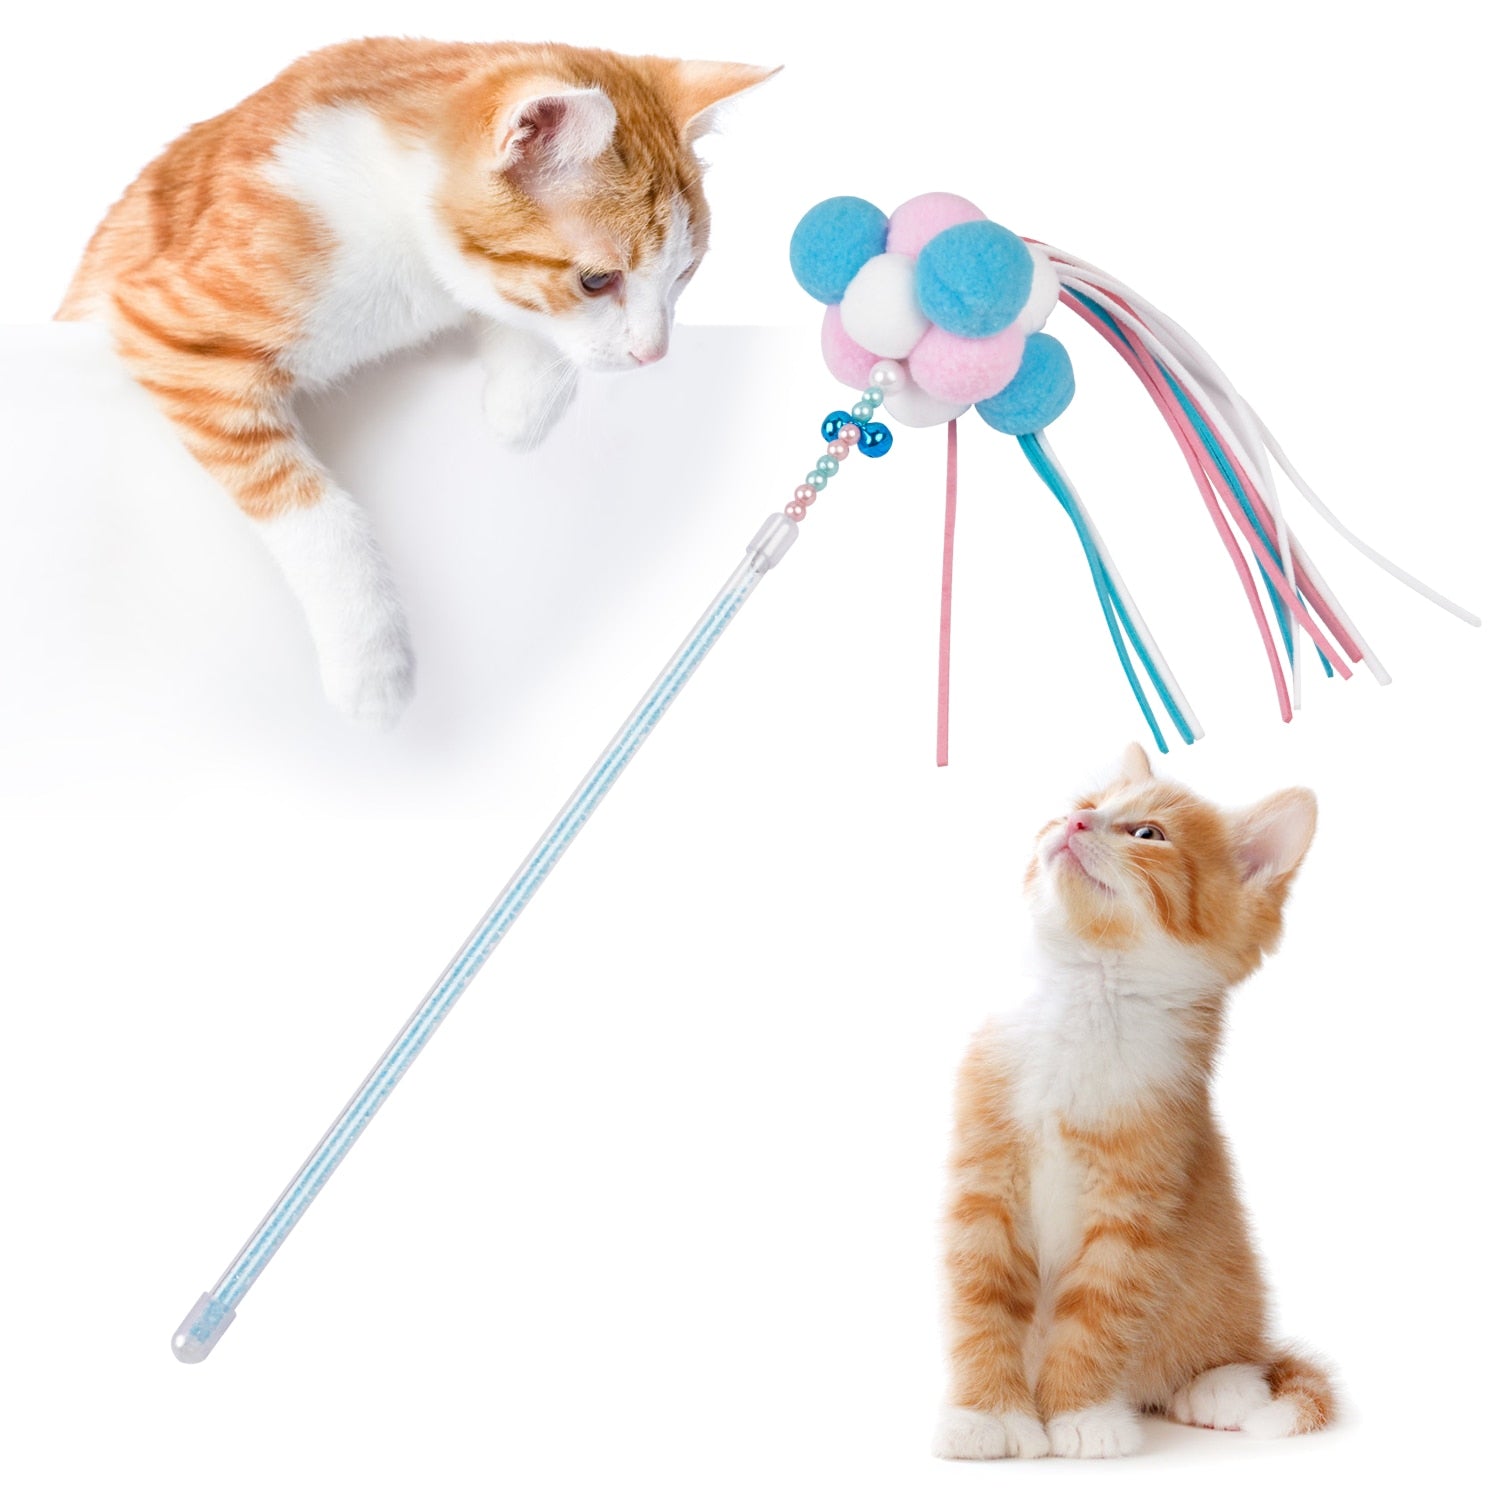 Creative Cat Teaser Wand Creative Plush Tassel Bell Cat Teaser Toy Cat Interactive Toy Pet Toy Supplies 2019 New Arrive-ebowsos